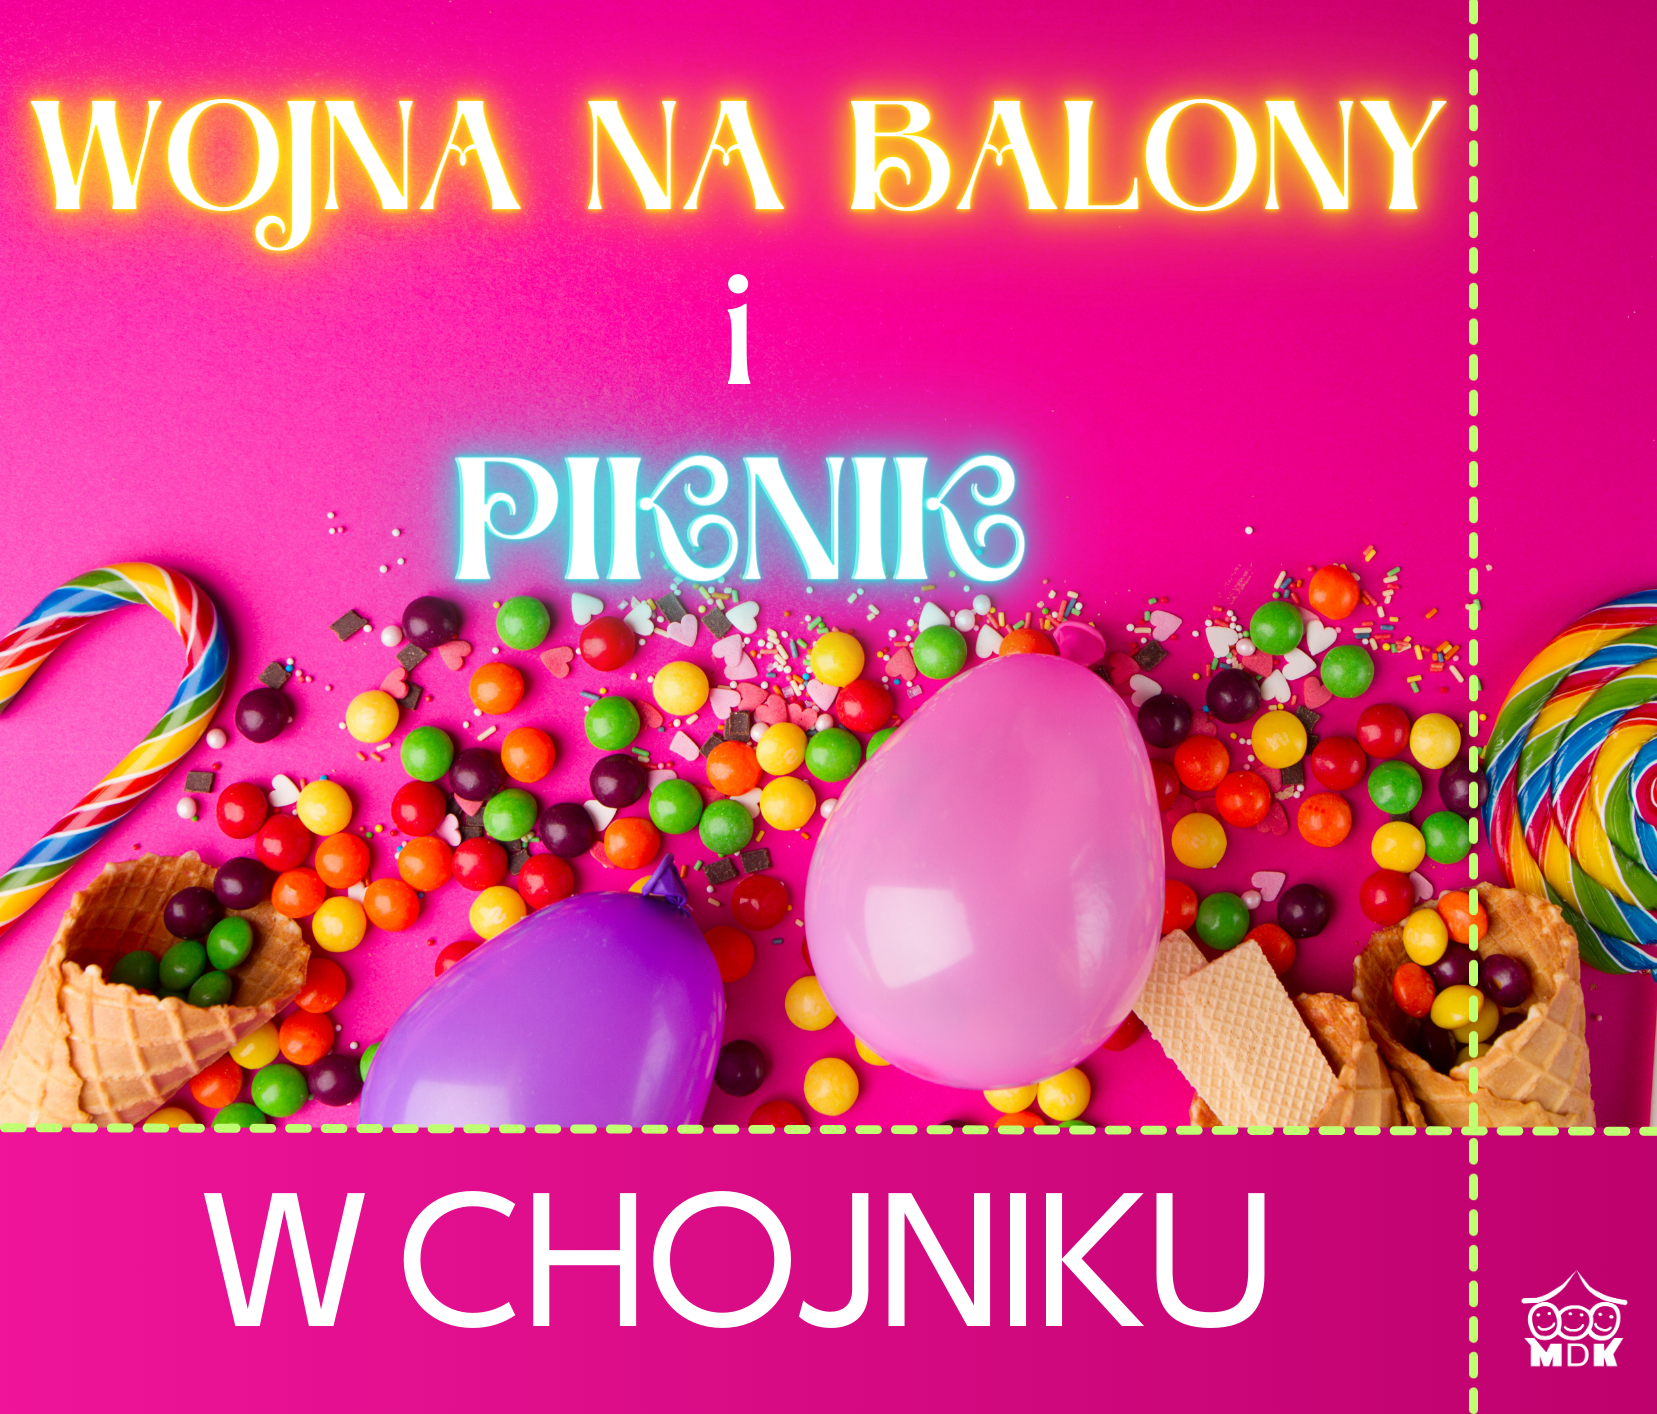 You are currently viewing Wojna na balony i piknik w Chojniku